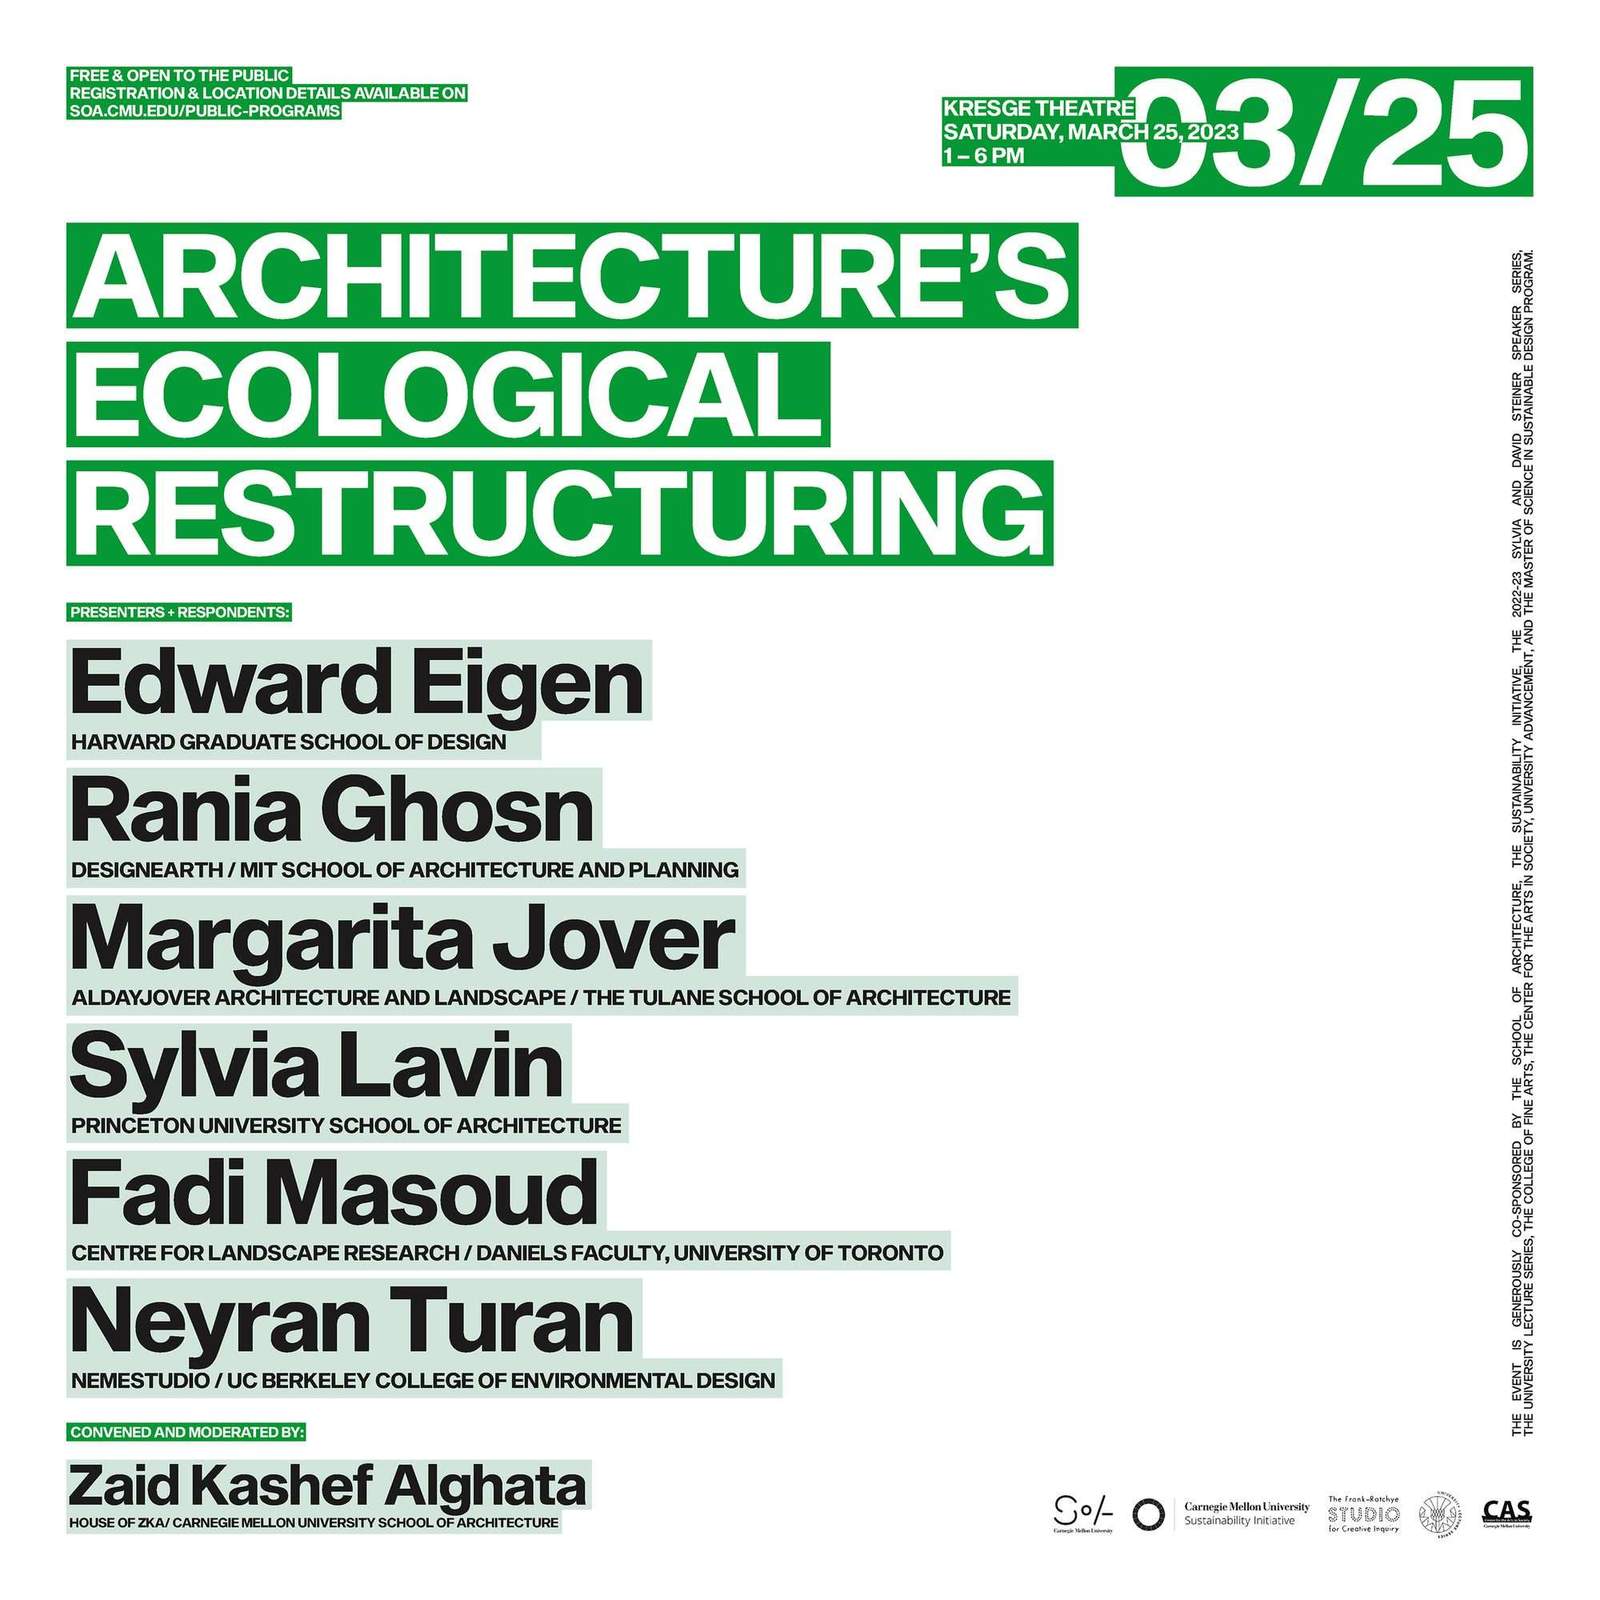 Architecture’s Ecological Restructuring إعادة الهيكلة البيئية للعمارة